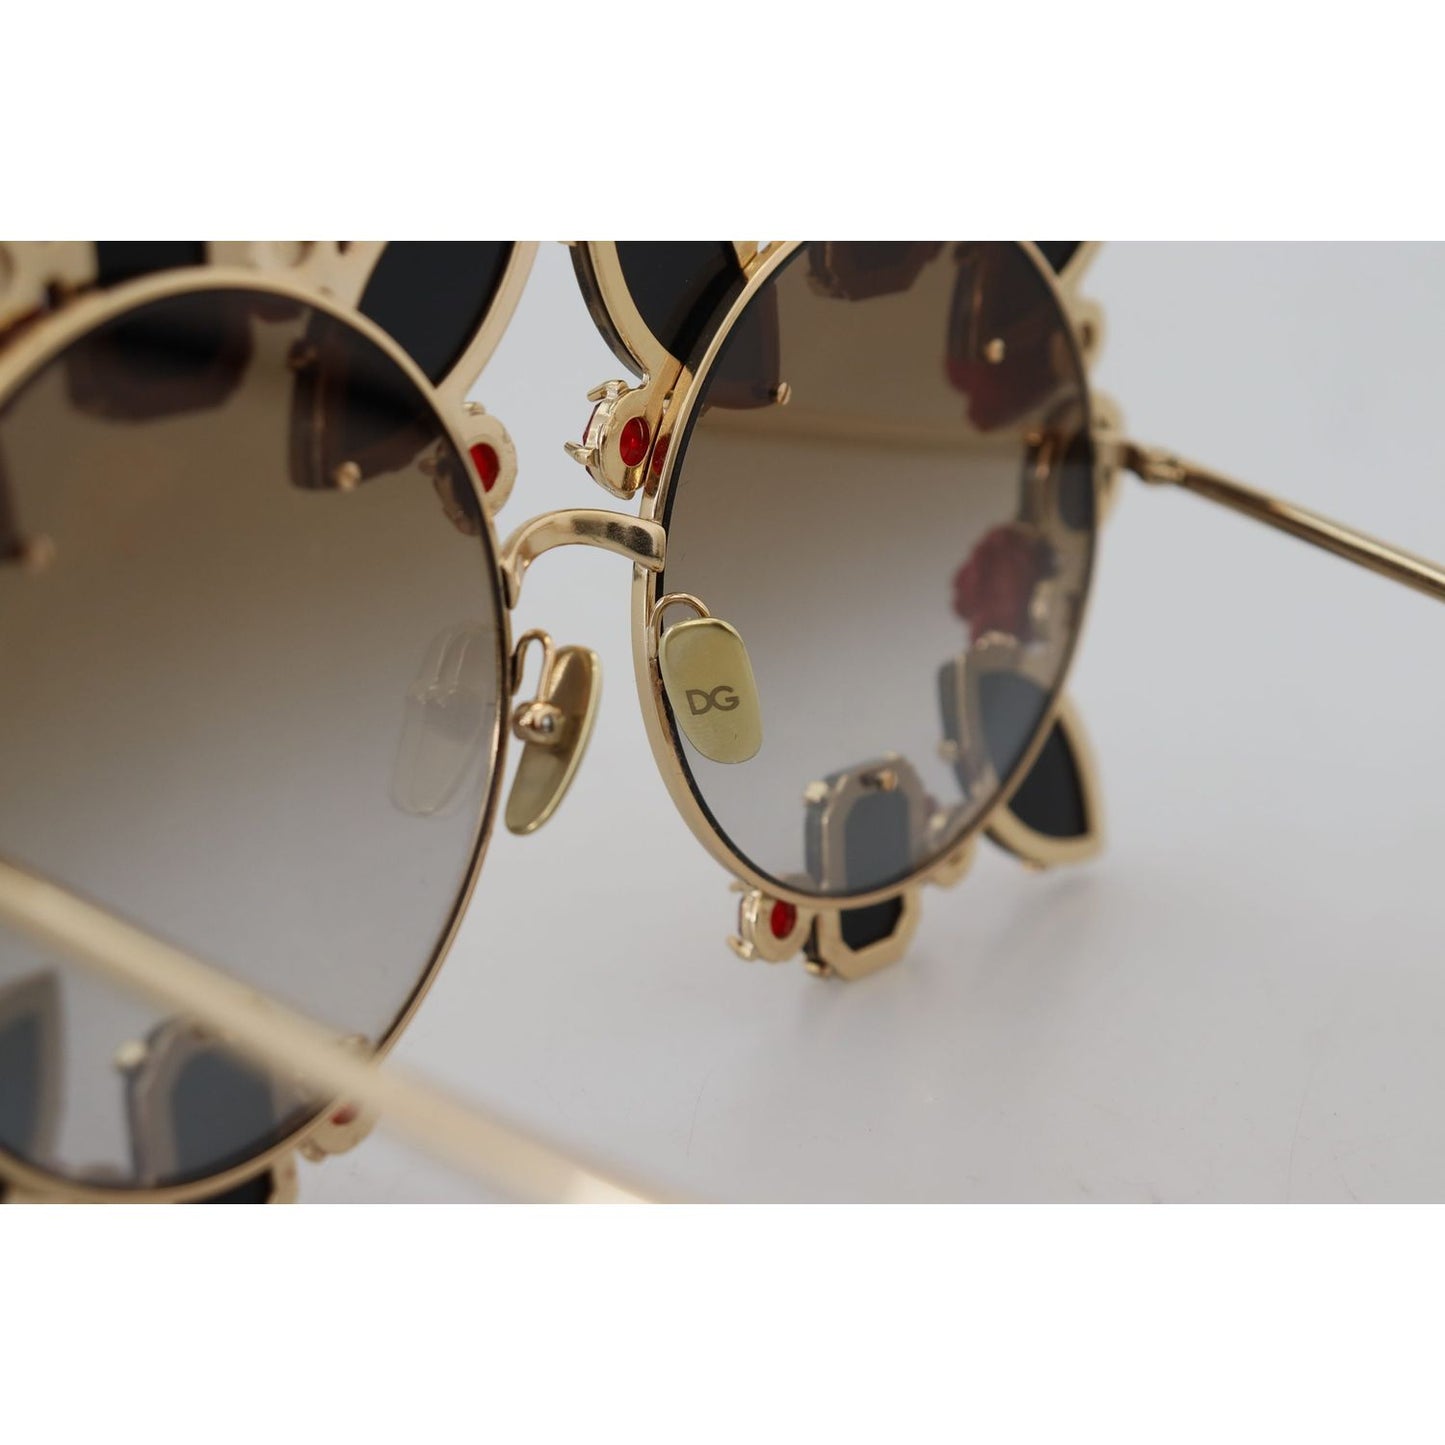 Dolce & Gabbana Elegant Round Rose-Embellished Sunglasses gold-metal-frame-roses-embellished-dg2207b-sunglasses IMG_1482-1-scaled-f73e0383-272.jpg